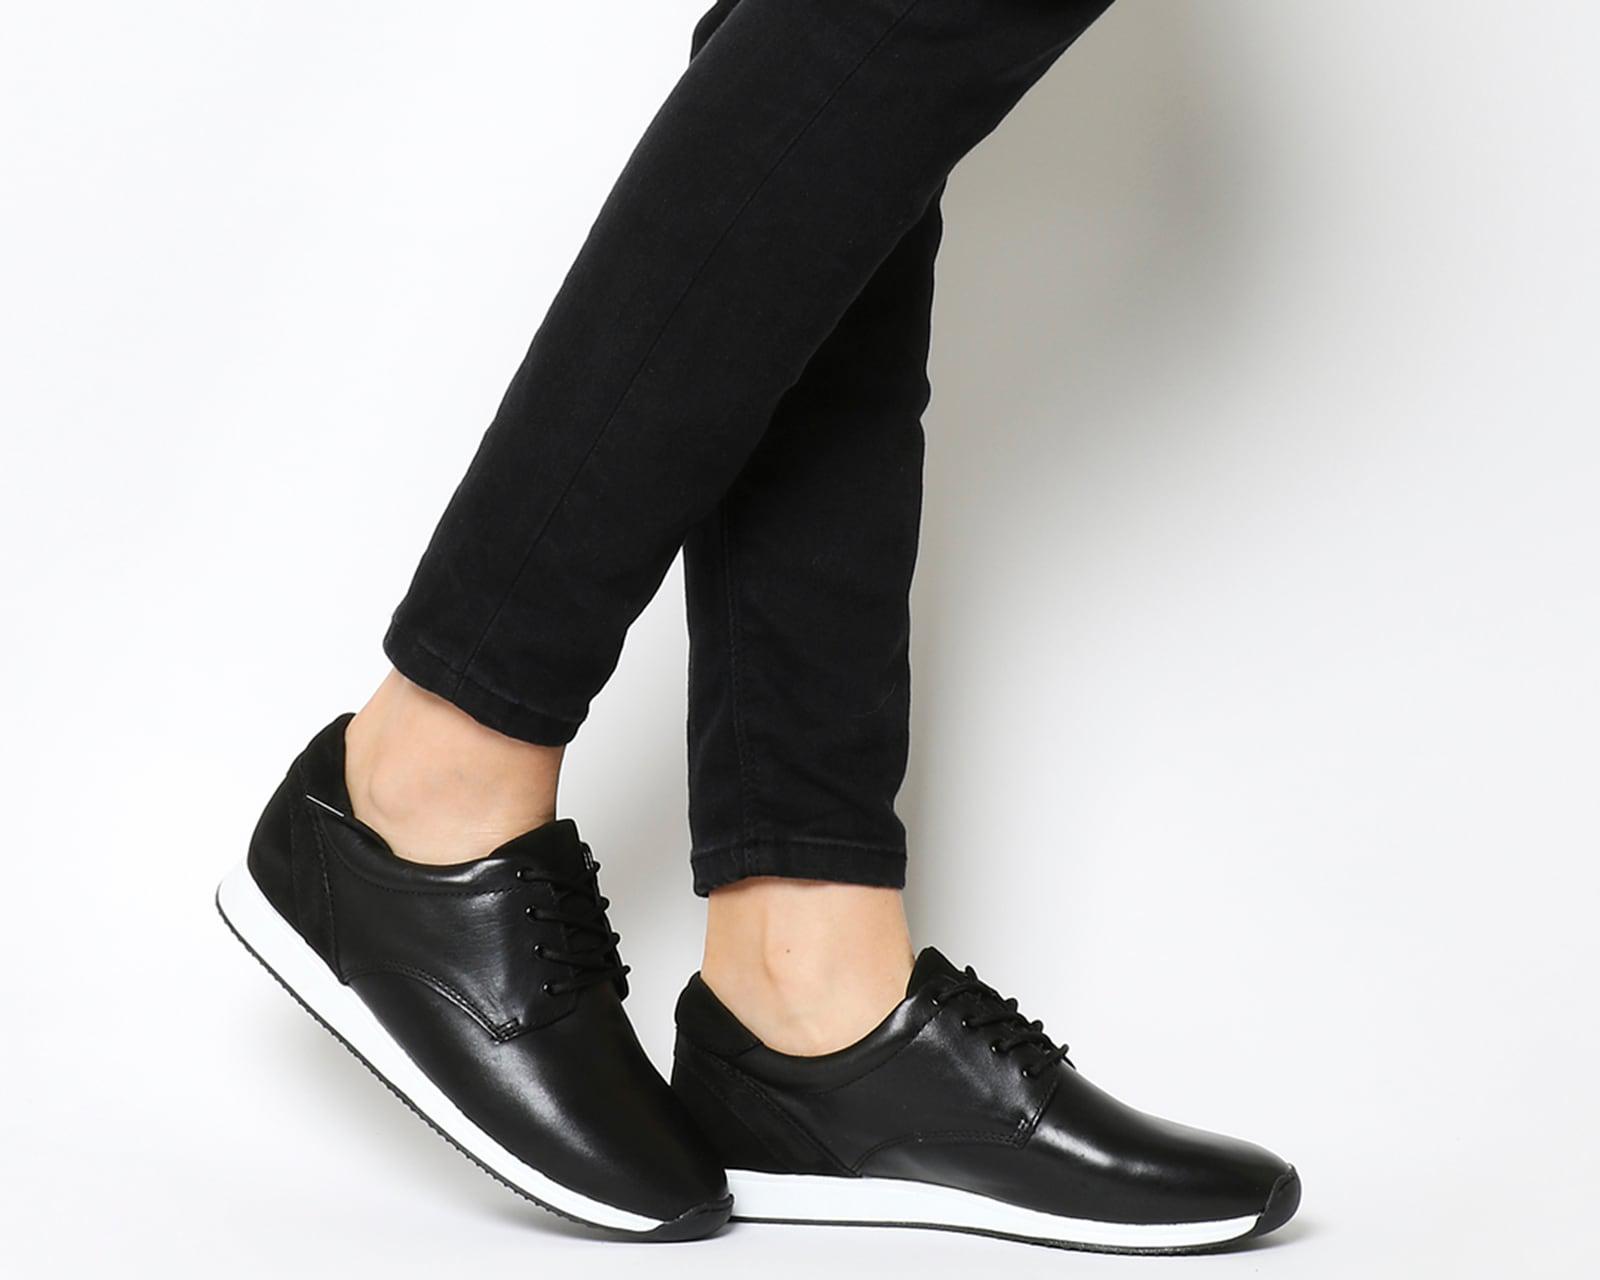 Vagabond Leather Kasai Sneaker in Black - Lyst